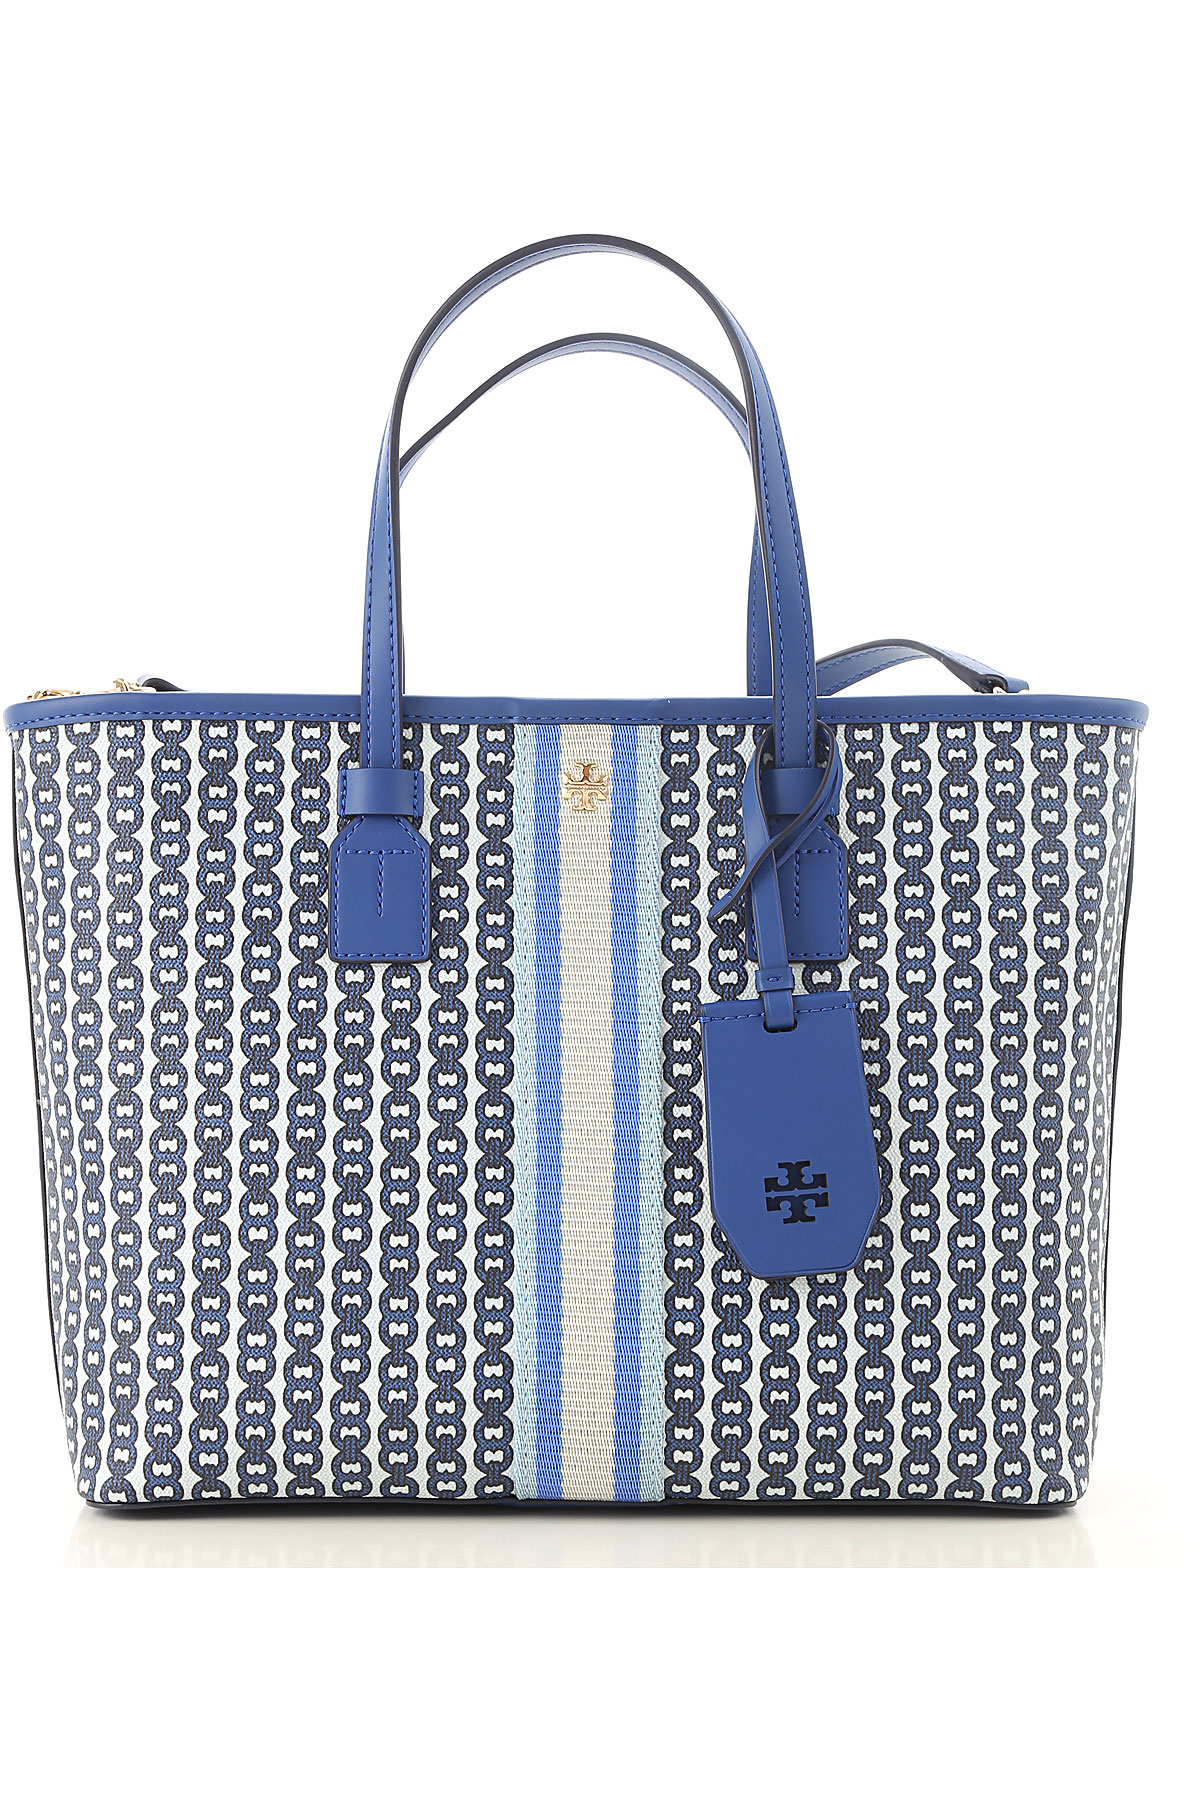 Handbags Tory Burch, Style code 53304453